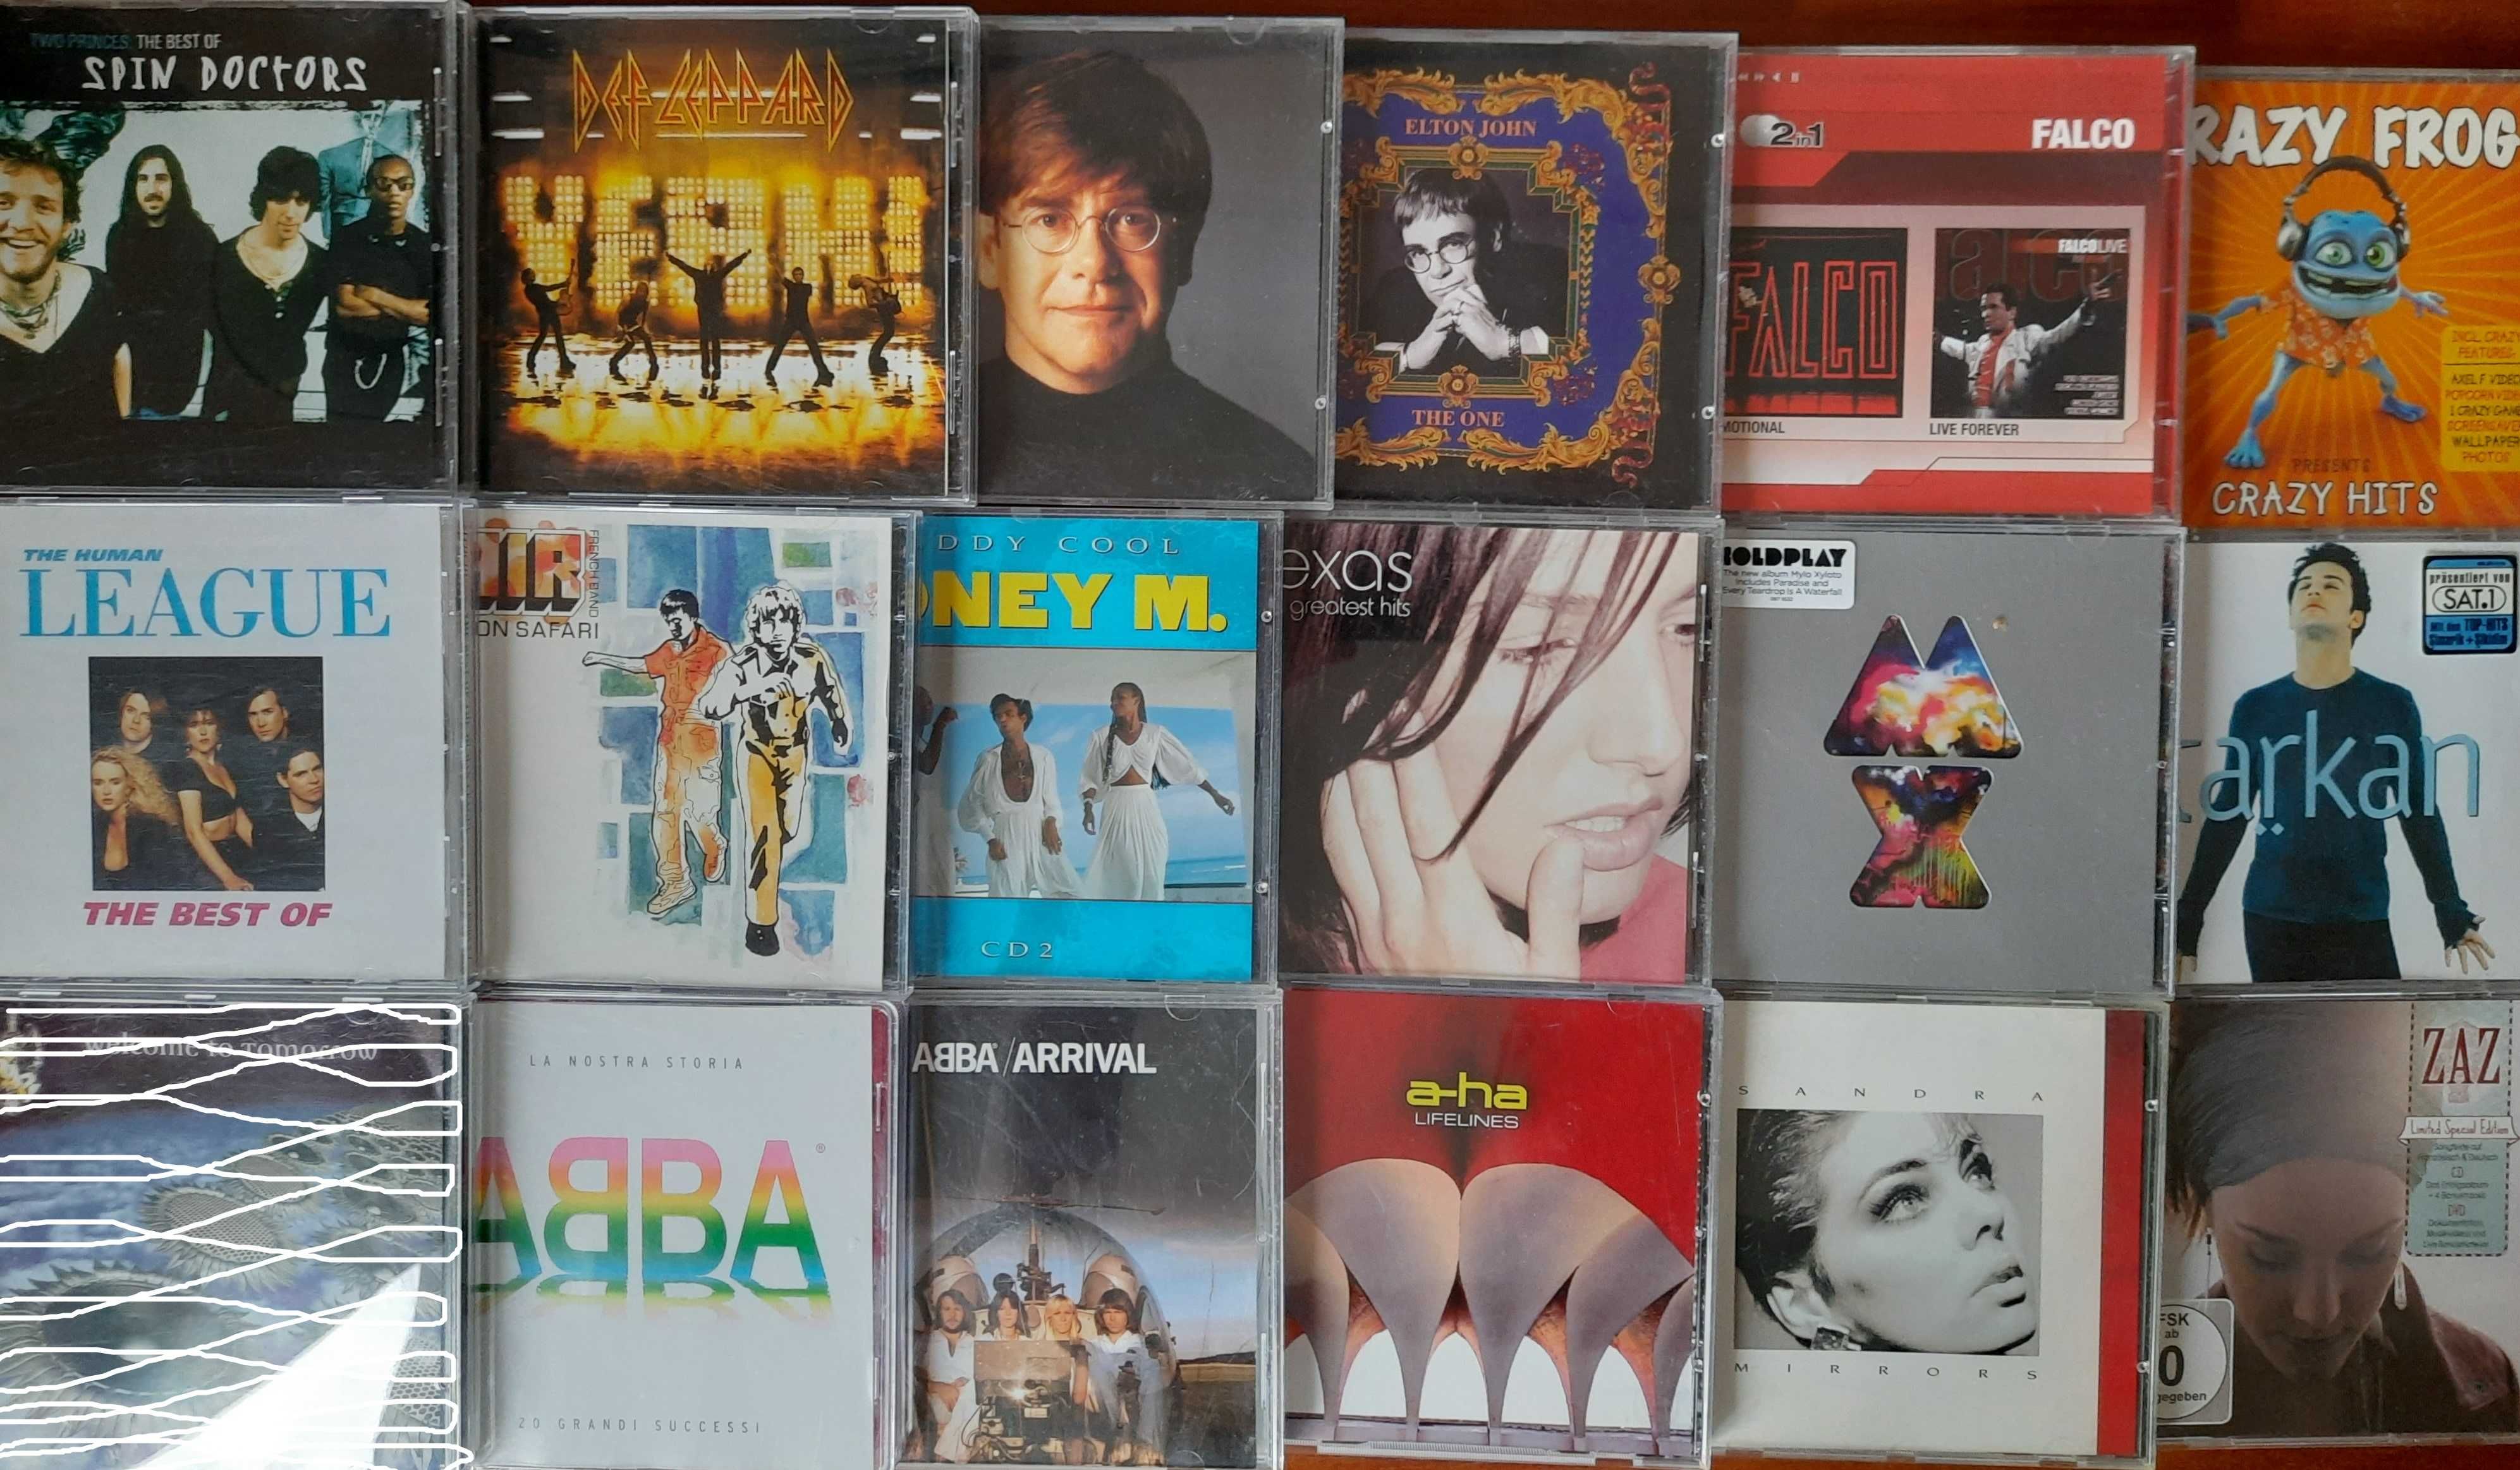 CD (Audio) Elton John A- Ha Def Leppard Boney M ABBA Falco Sandra ZAZ